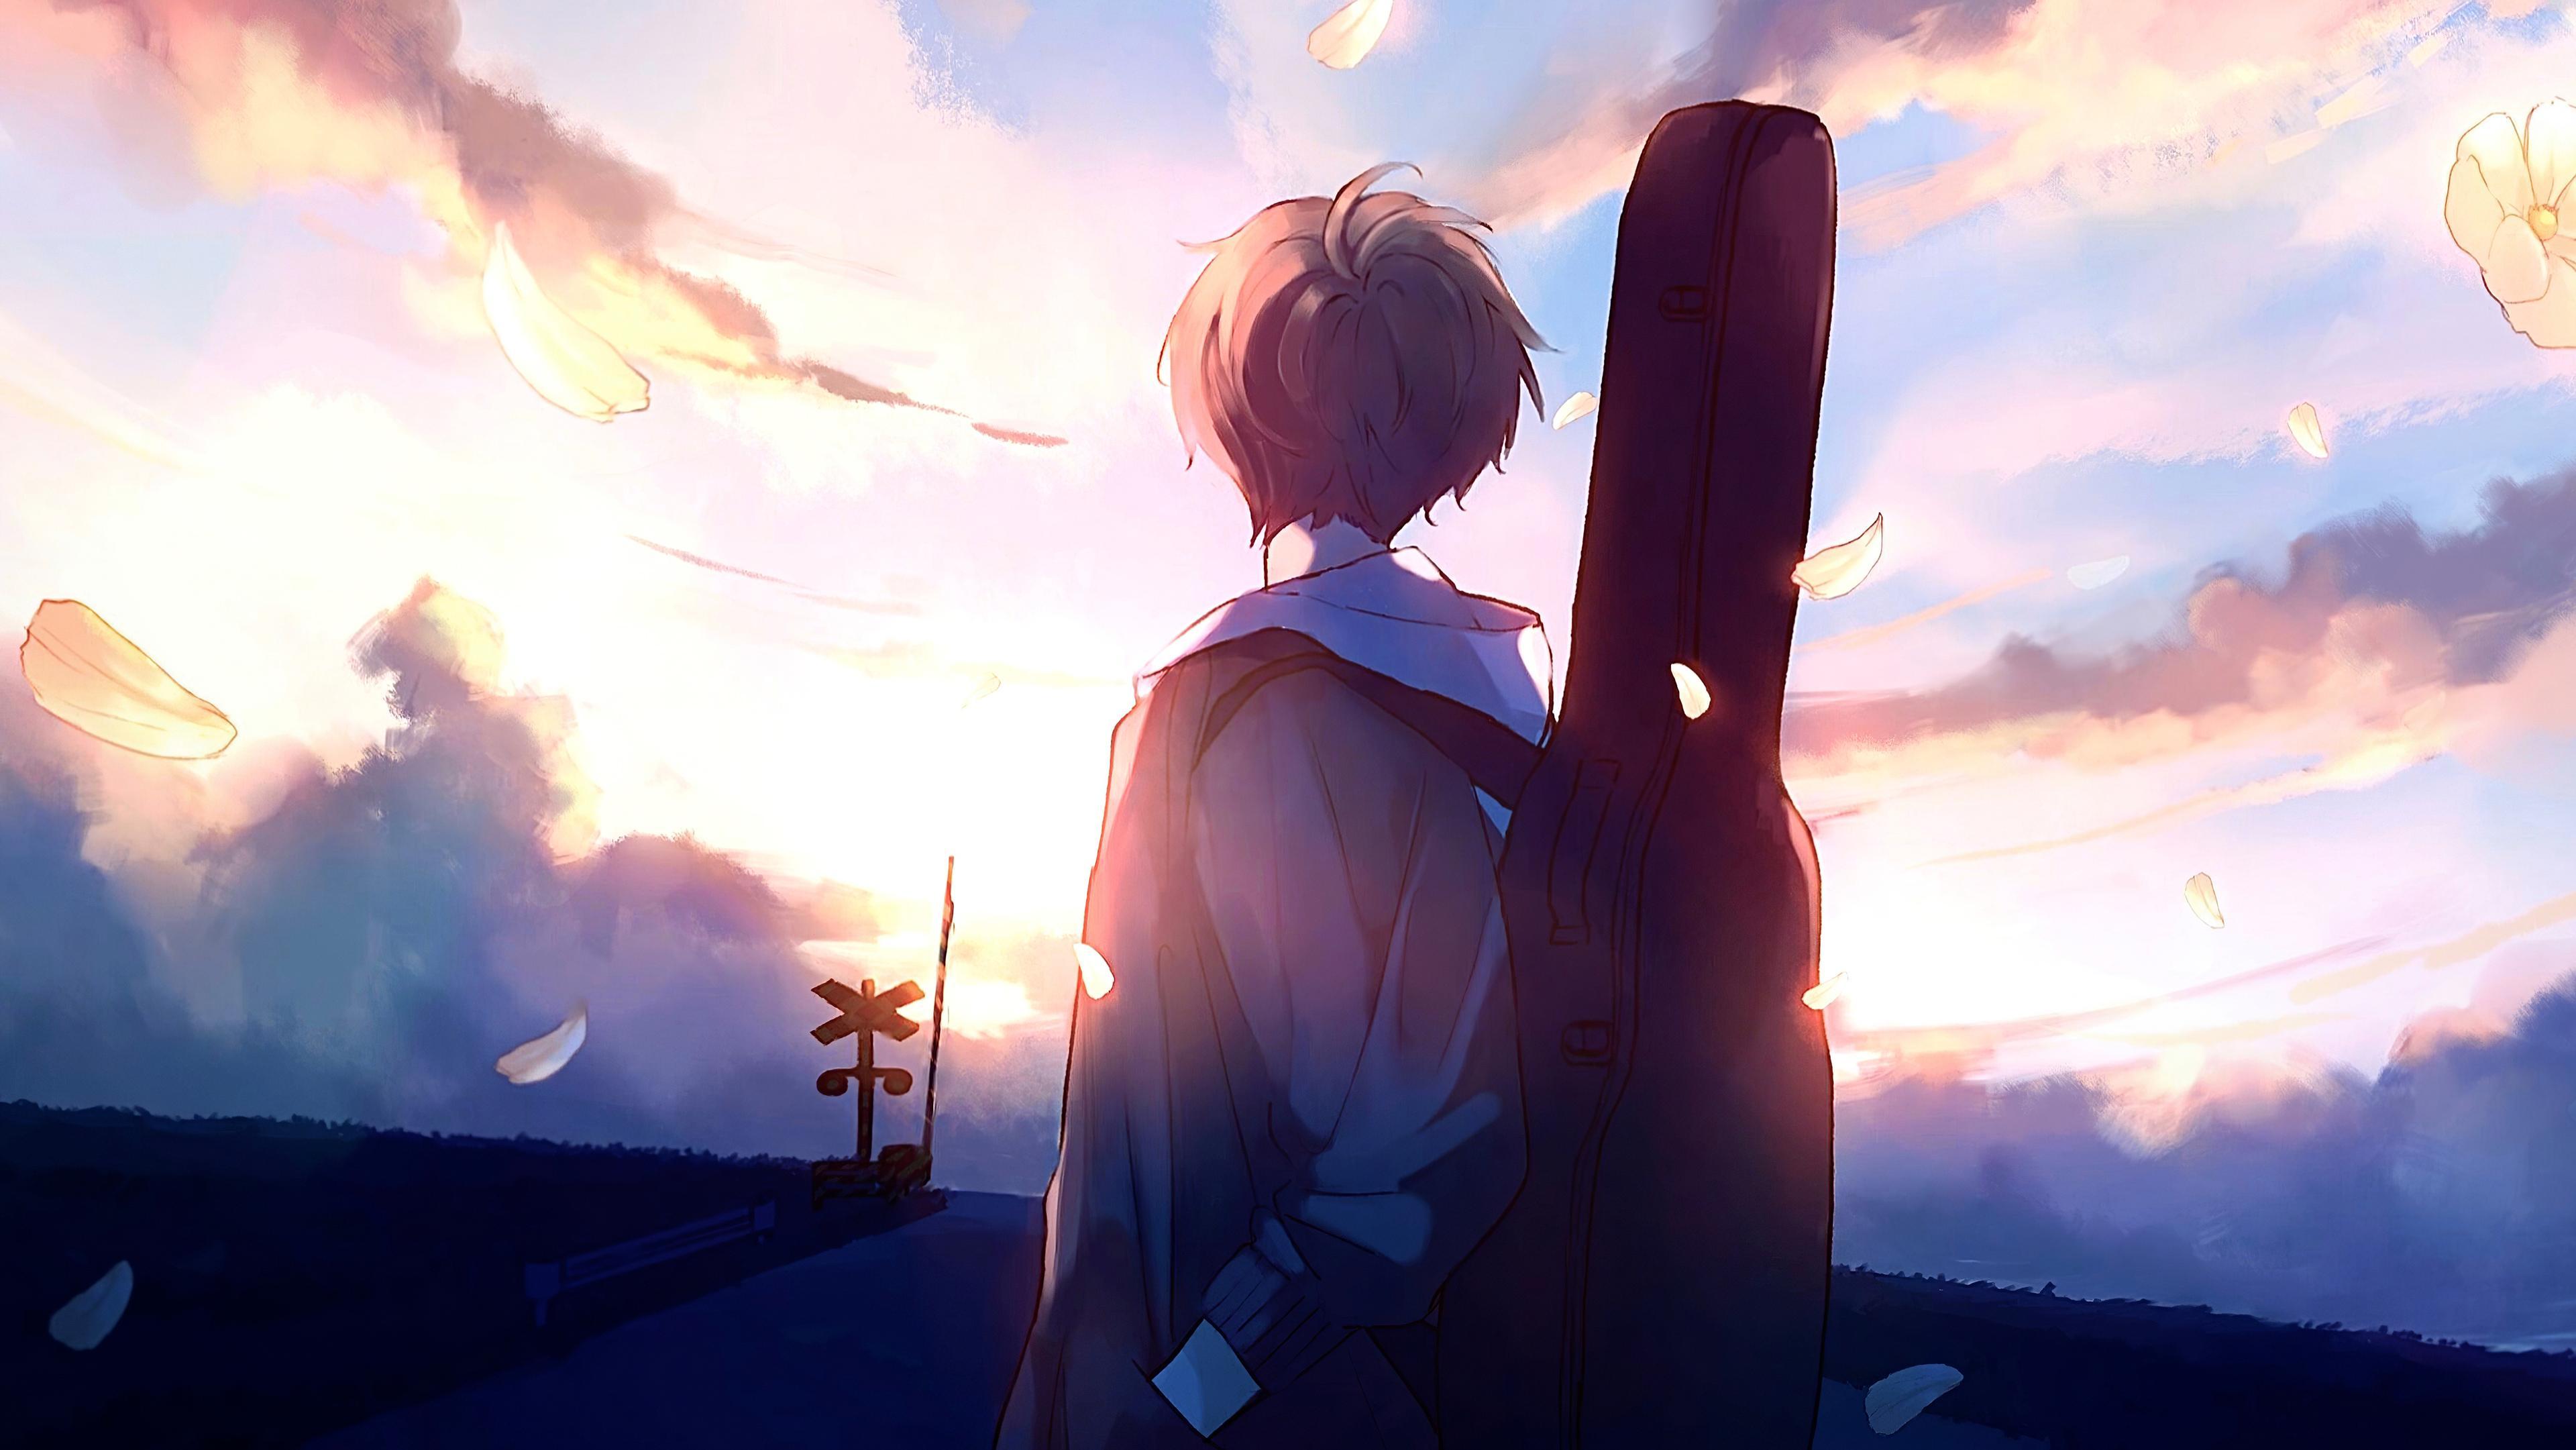 Anime Boy Guitar Painting, HD Anime, 4k Wallpaper, Image